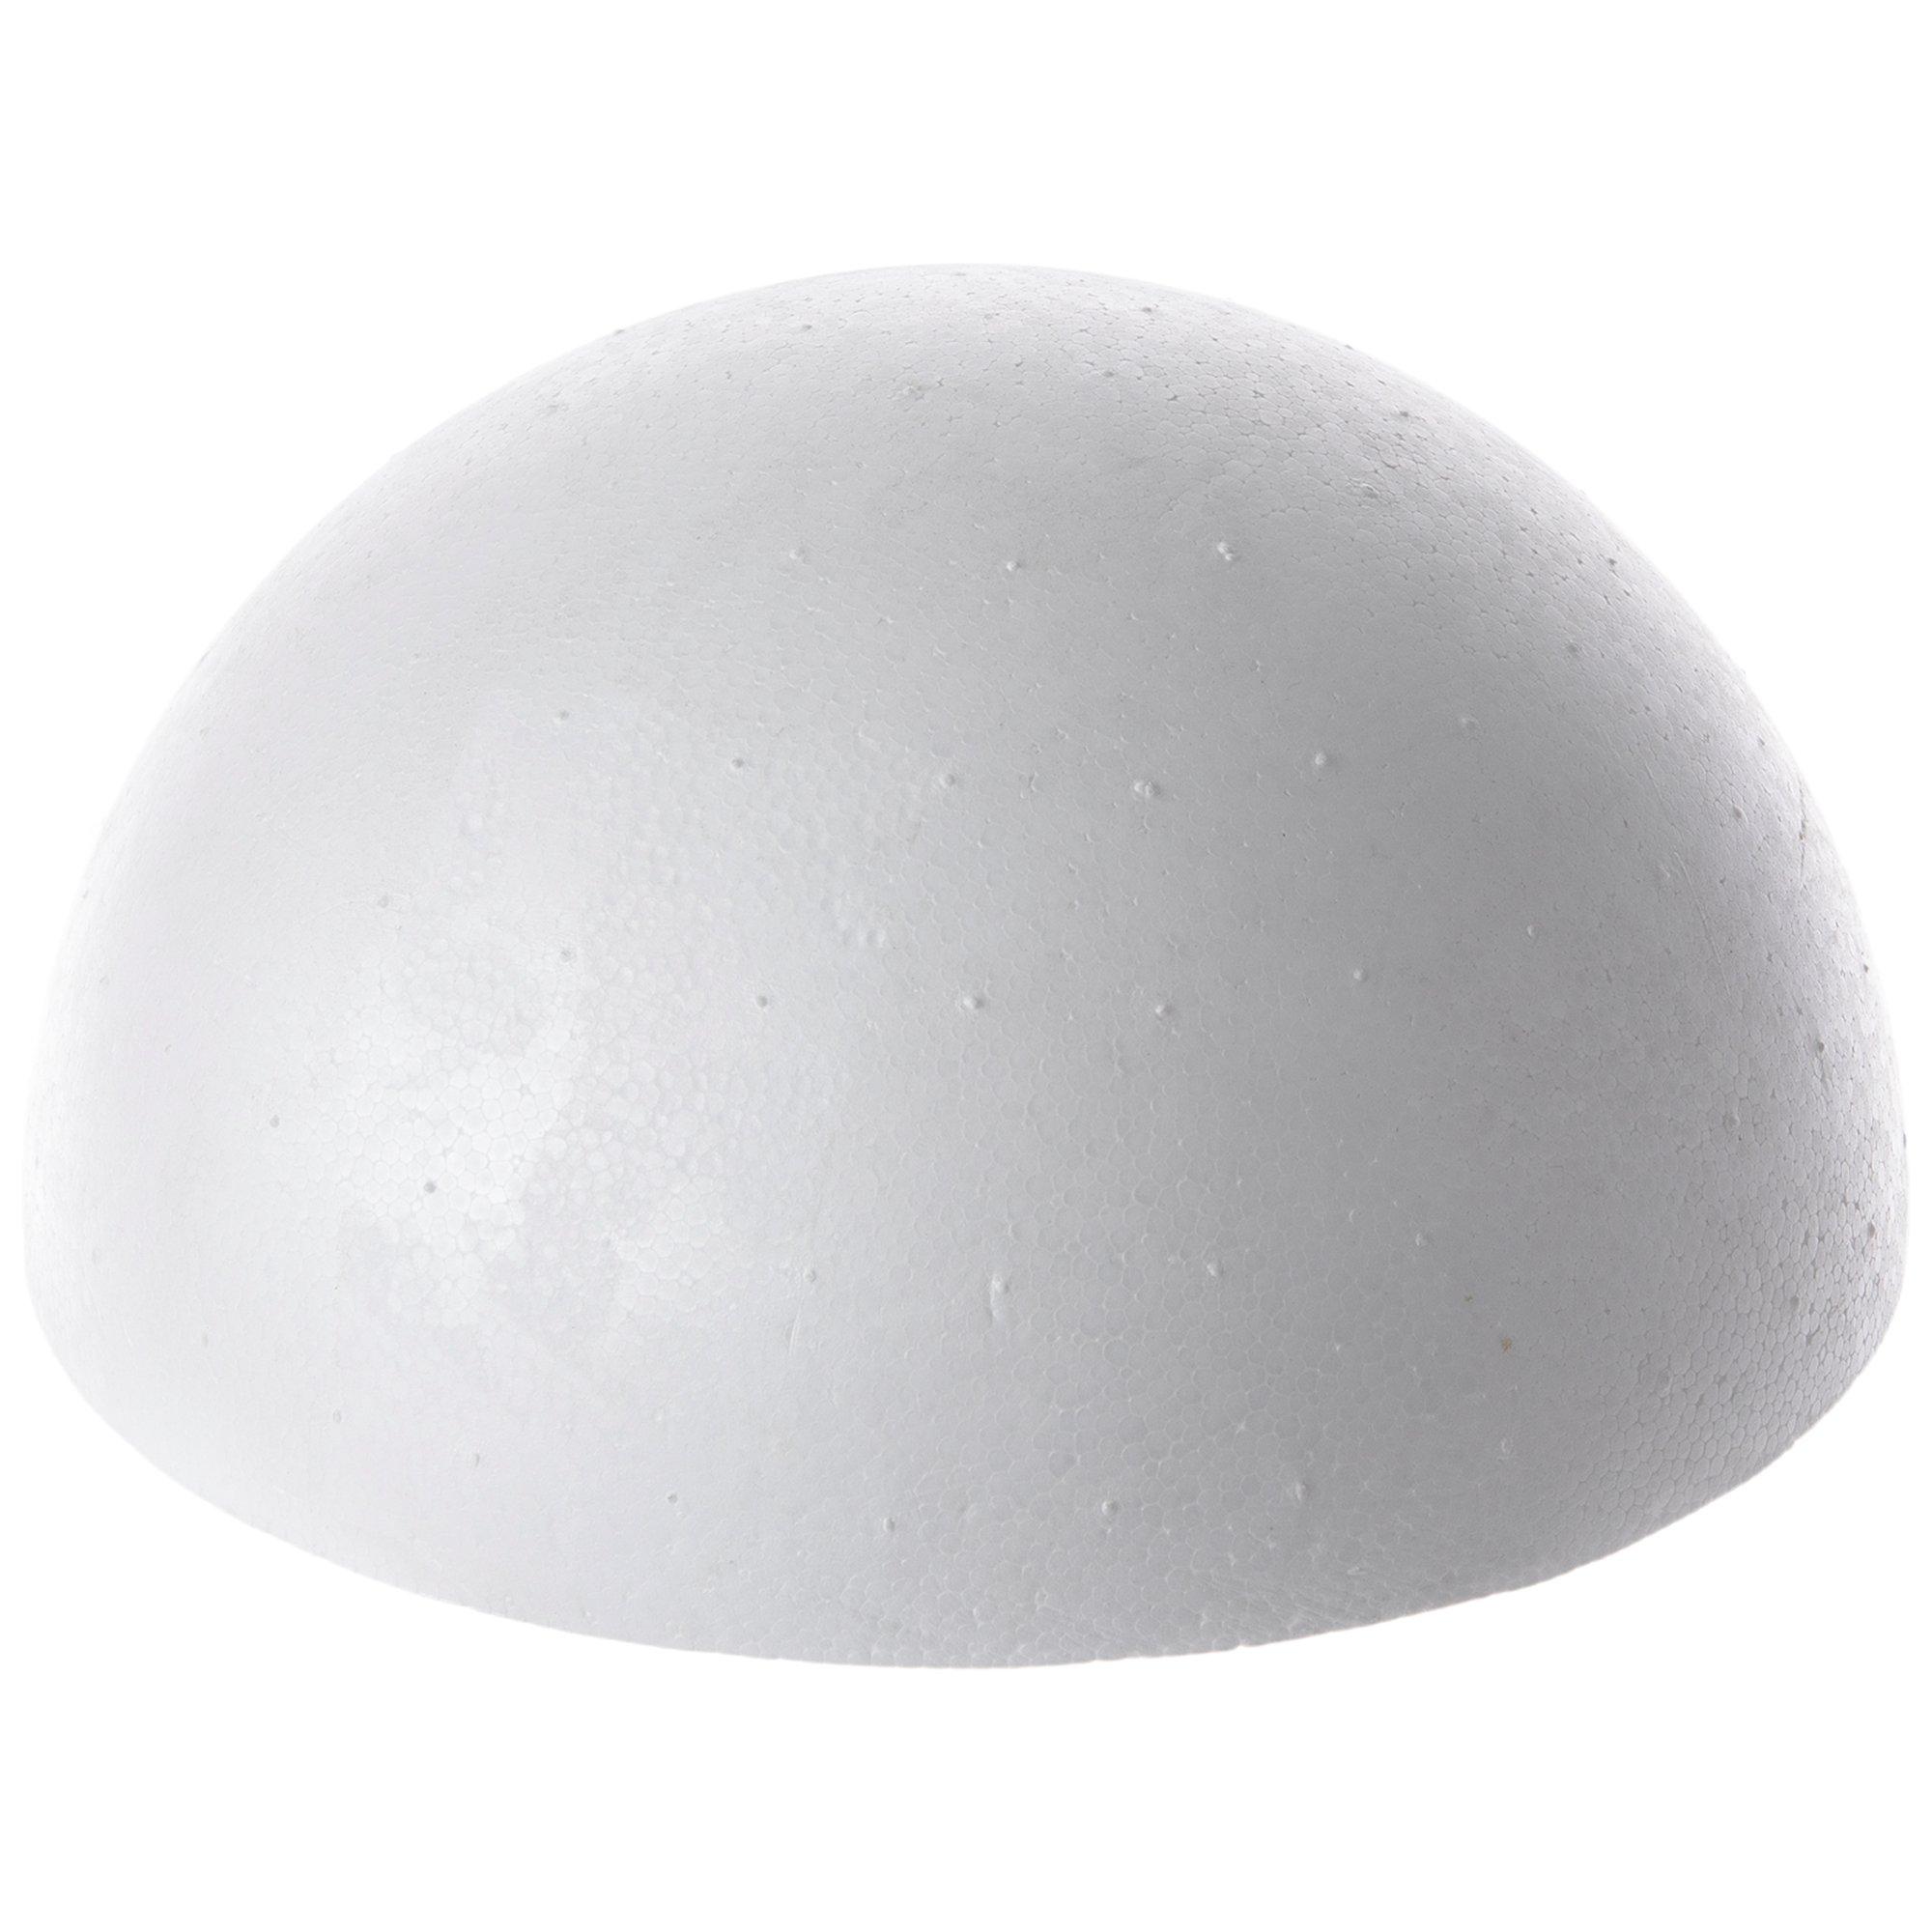 CraftFoM Foam Half Ball, Hobby Lobby, 1694132